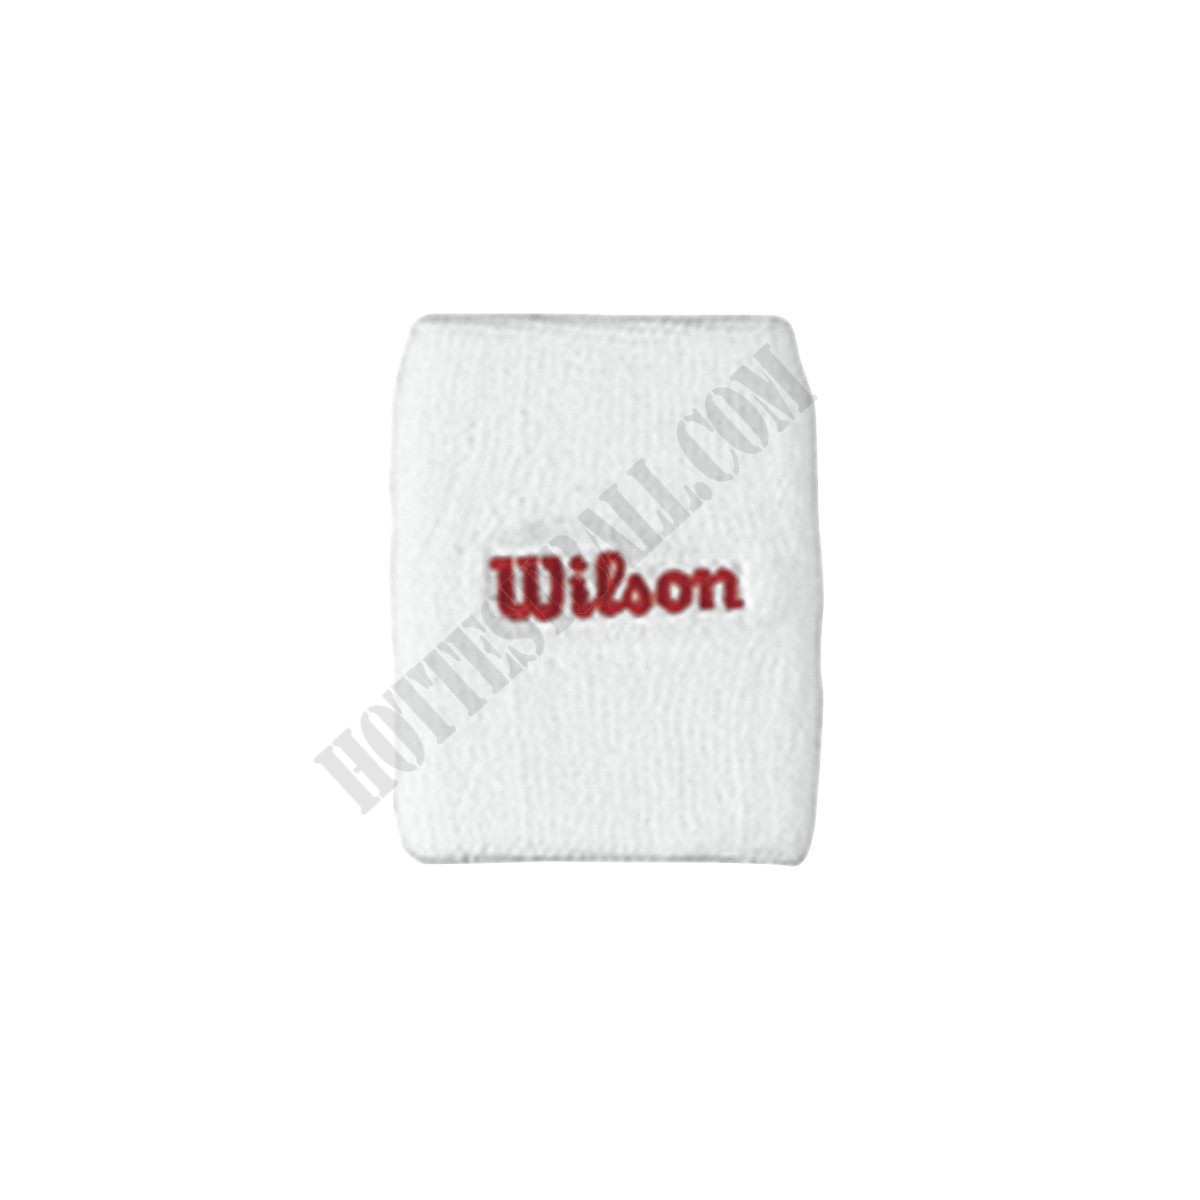 Wilson Double Wristband - Wilson Discount Store - -1